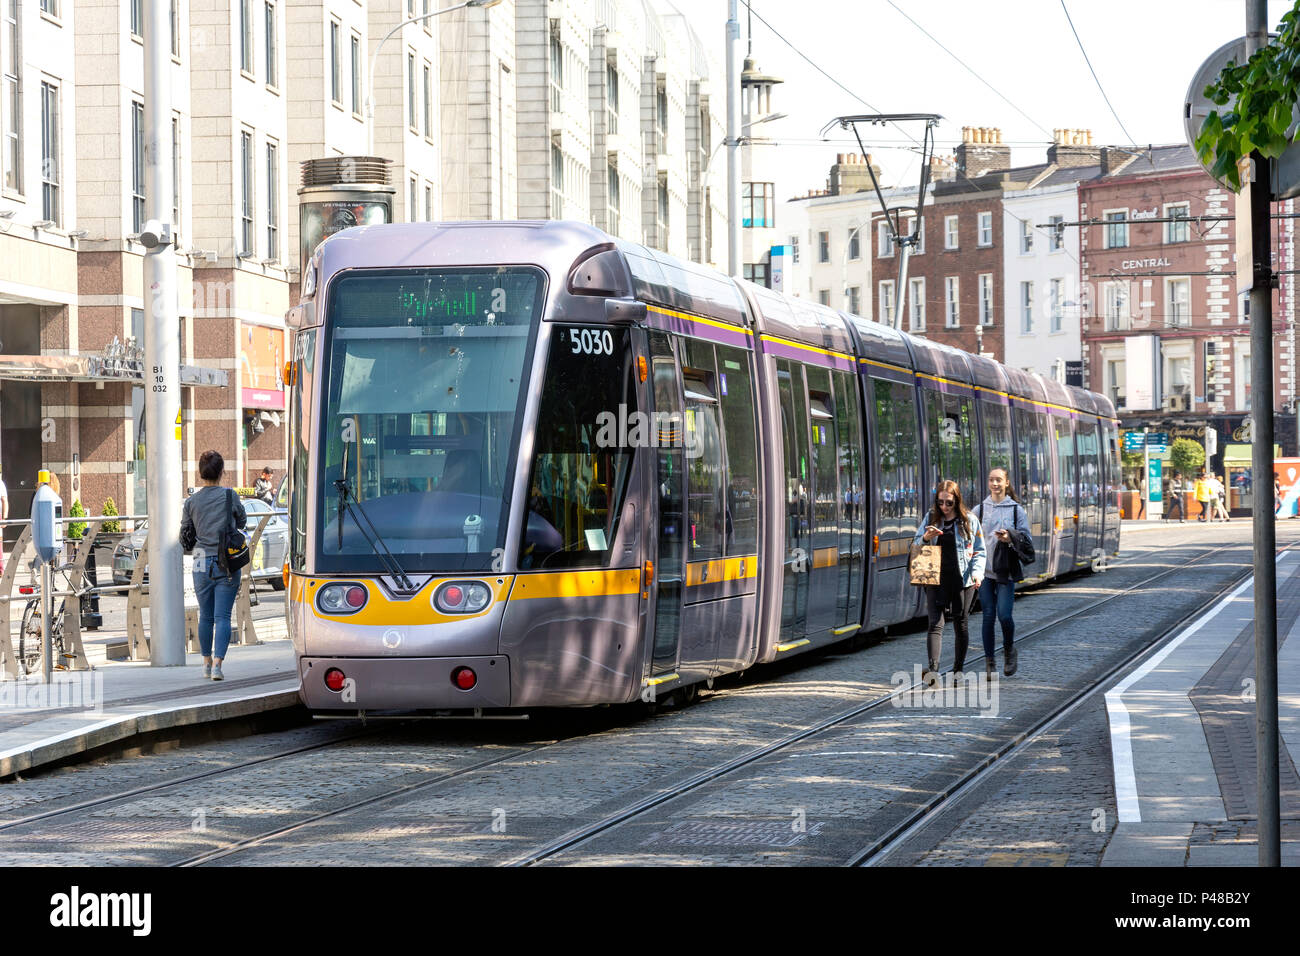 Luas tram/light rail transport system, St Stephen's Green, Dublin,    Republic of Ireland Stock Photo